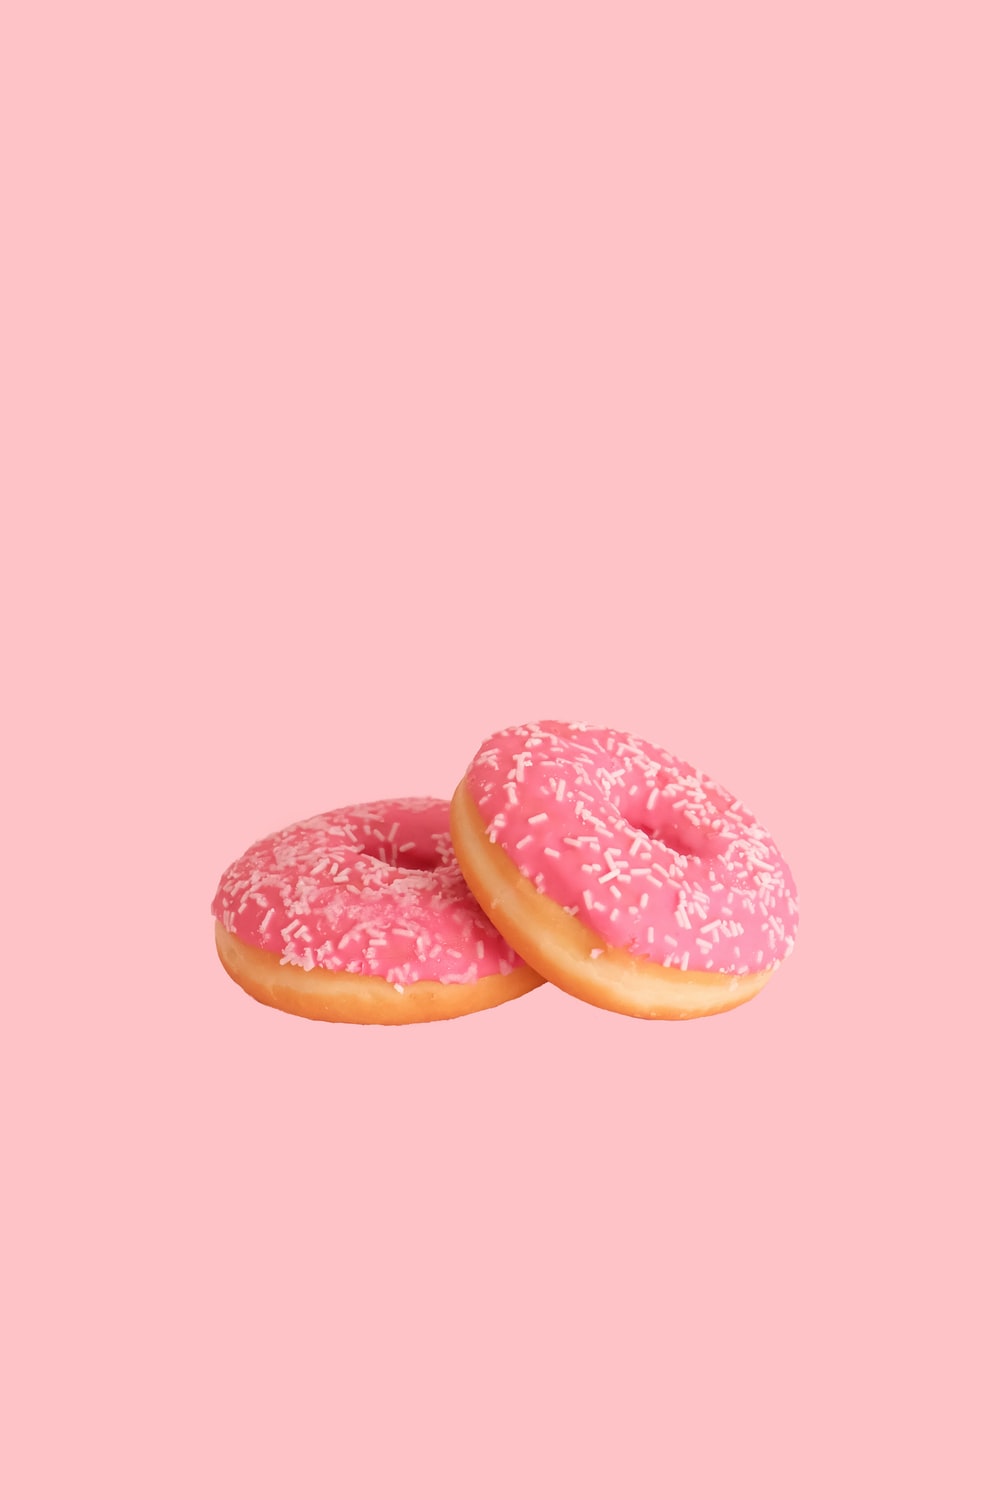 Pink Donut Pictures Download Images on Unsplash 1000x1500